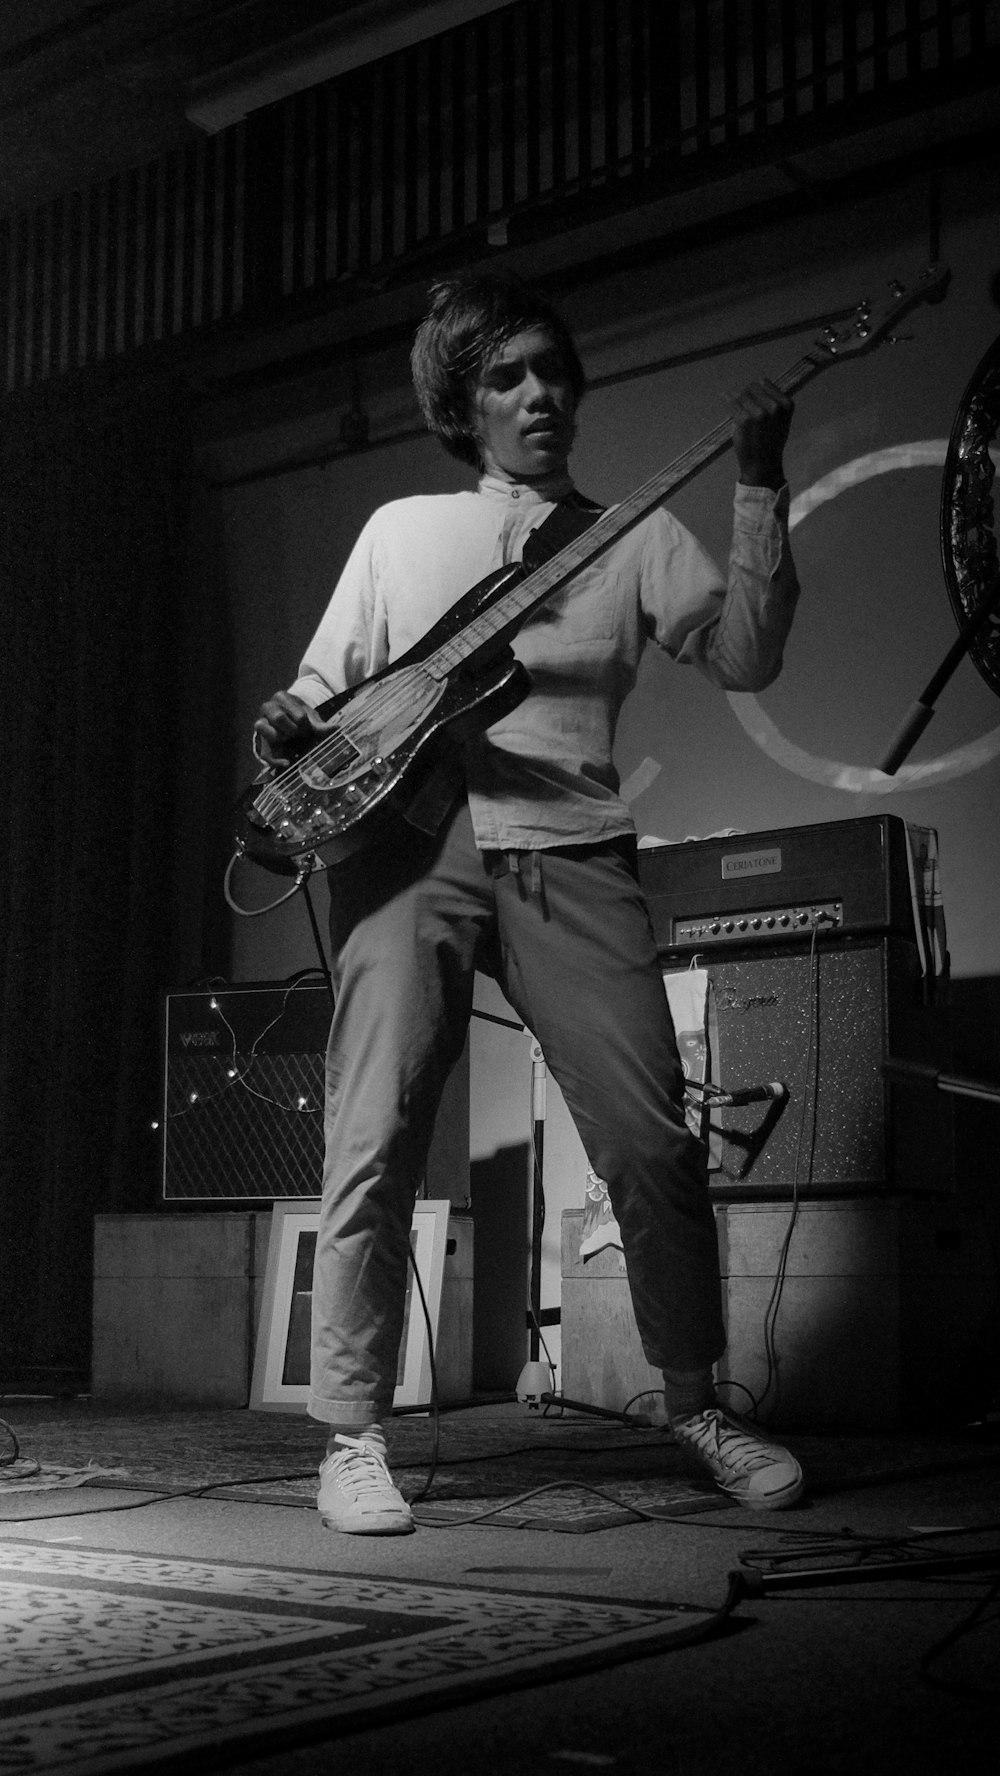 Fotografía en escala de grises de un hombre tocando la guitarra